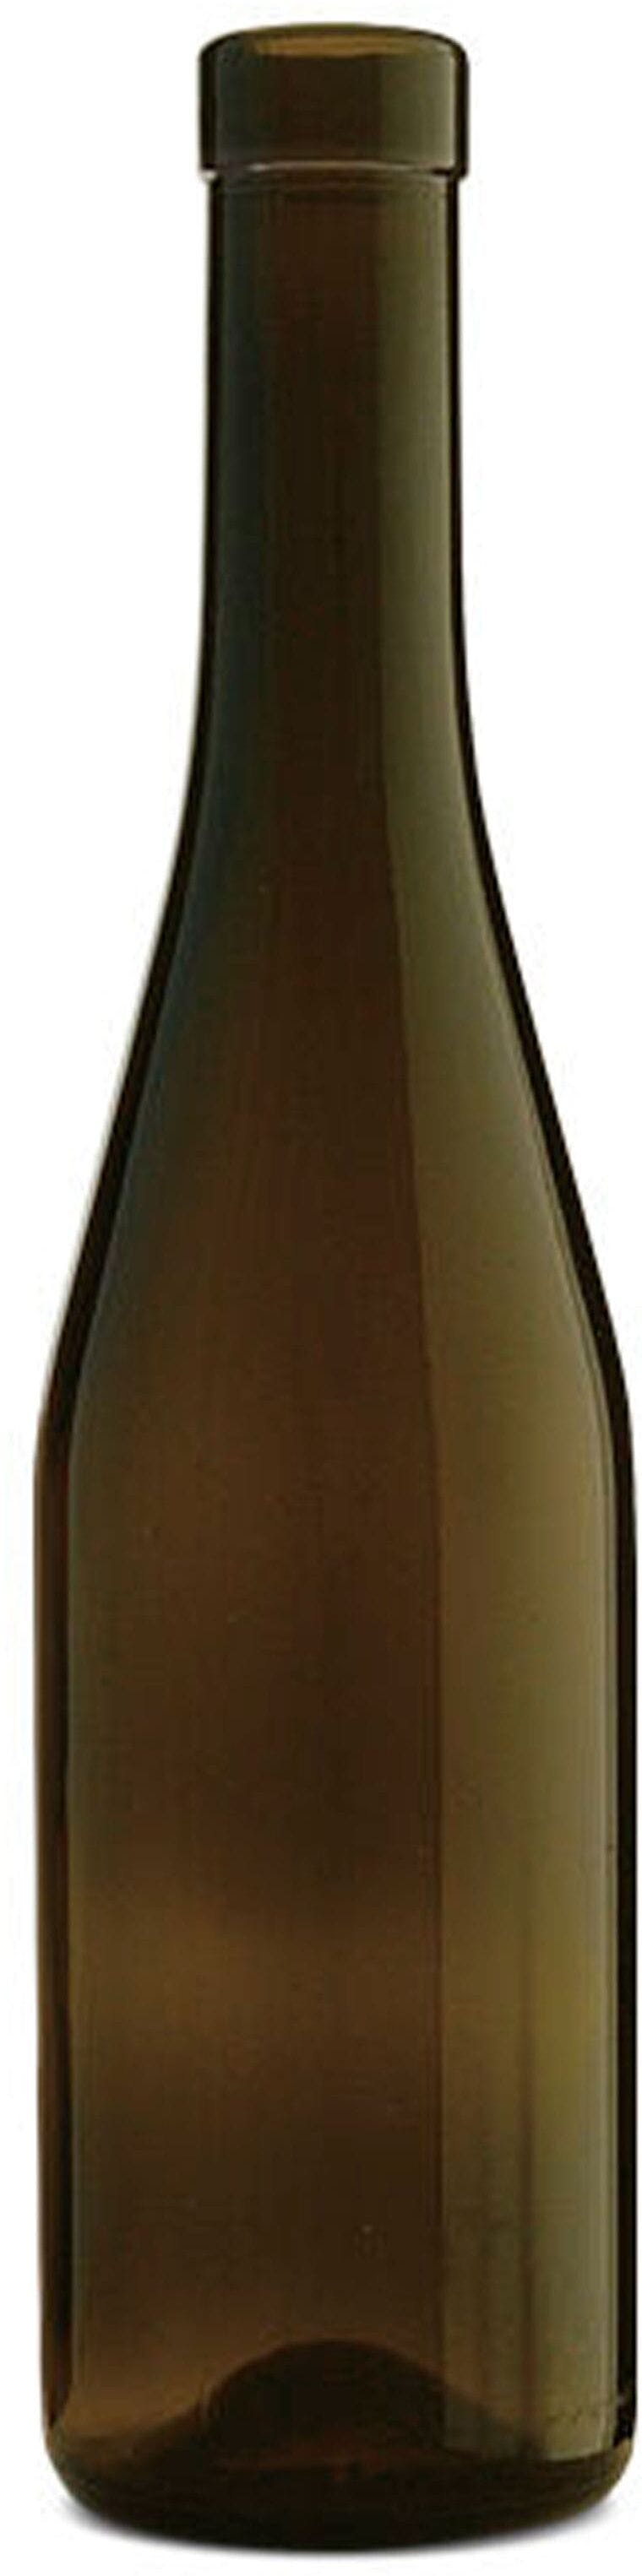 Bottle BORGOÑA NUOVA 375 ml BG-Cork